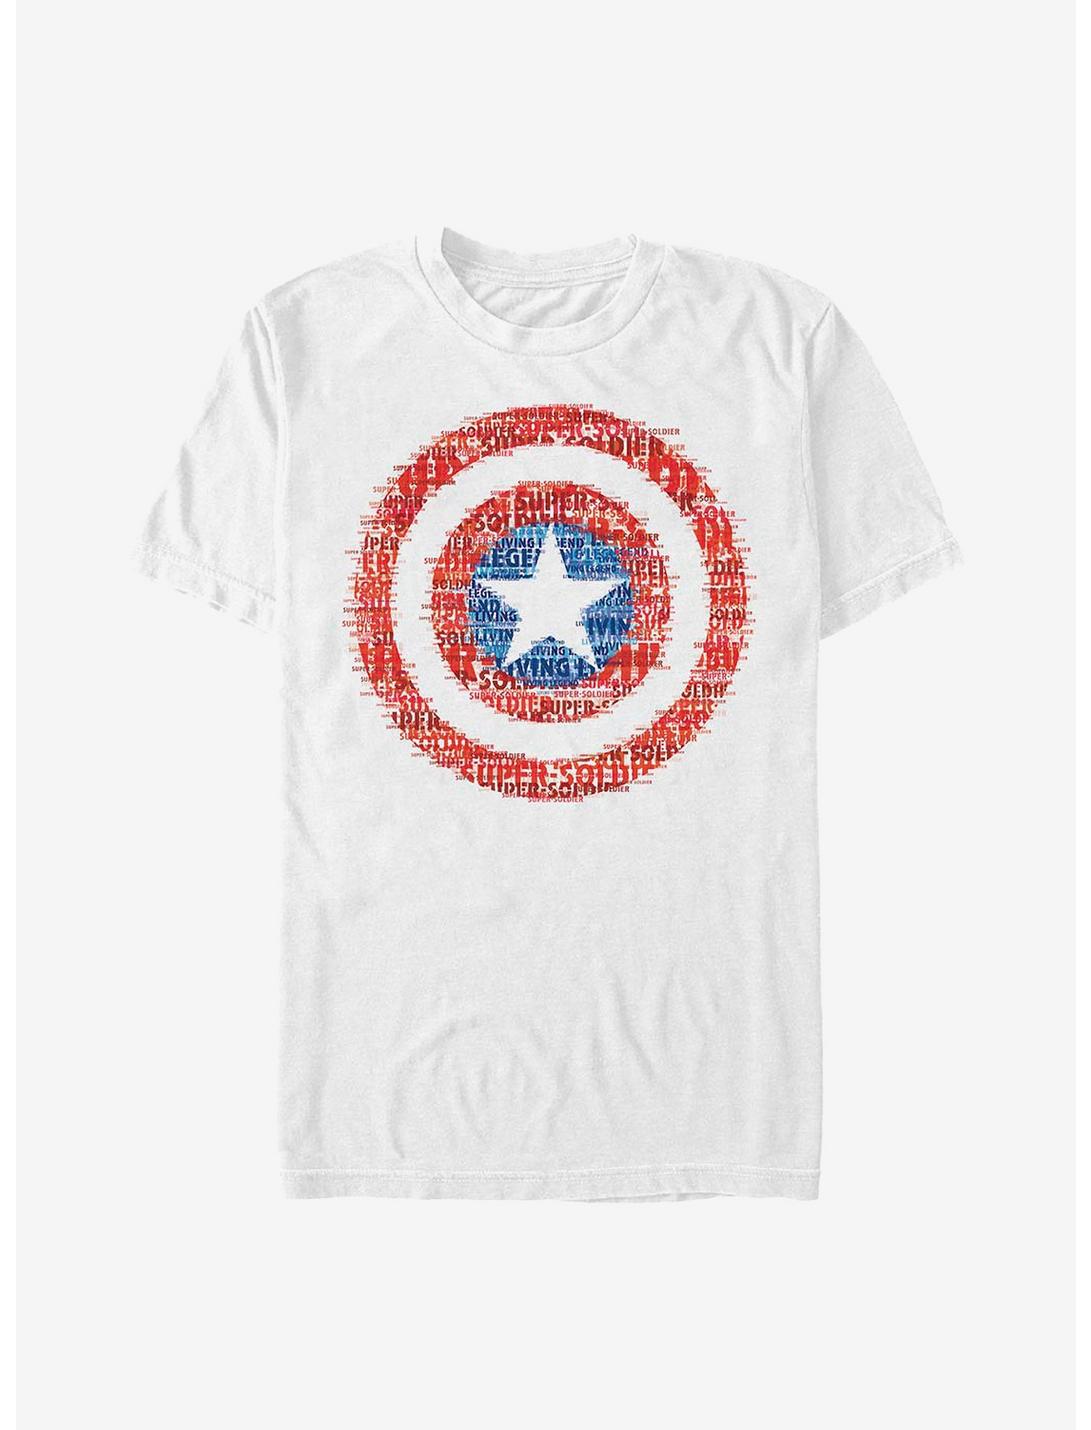 Marvel Captain America Super Soldier T-Shirt, WHITE, hi-res